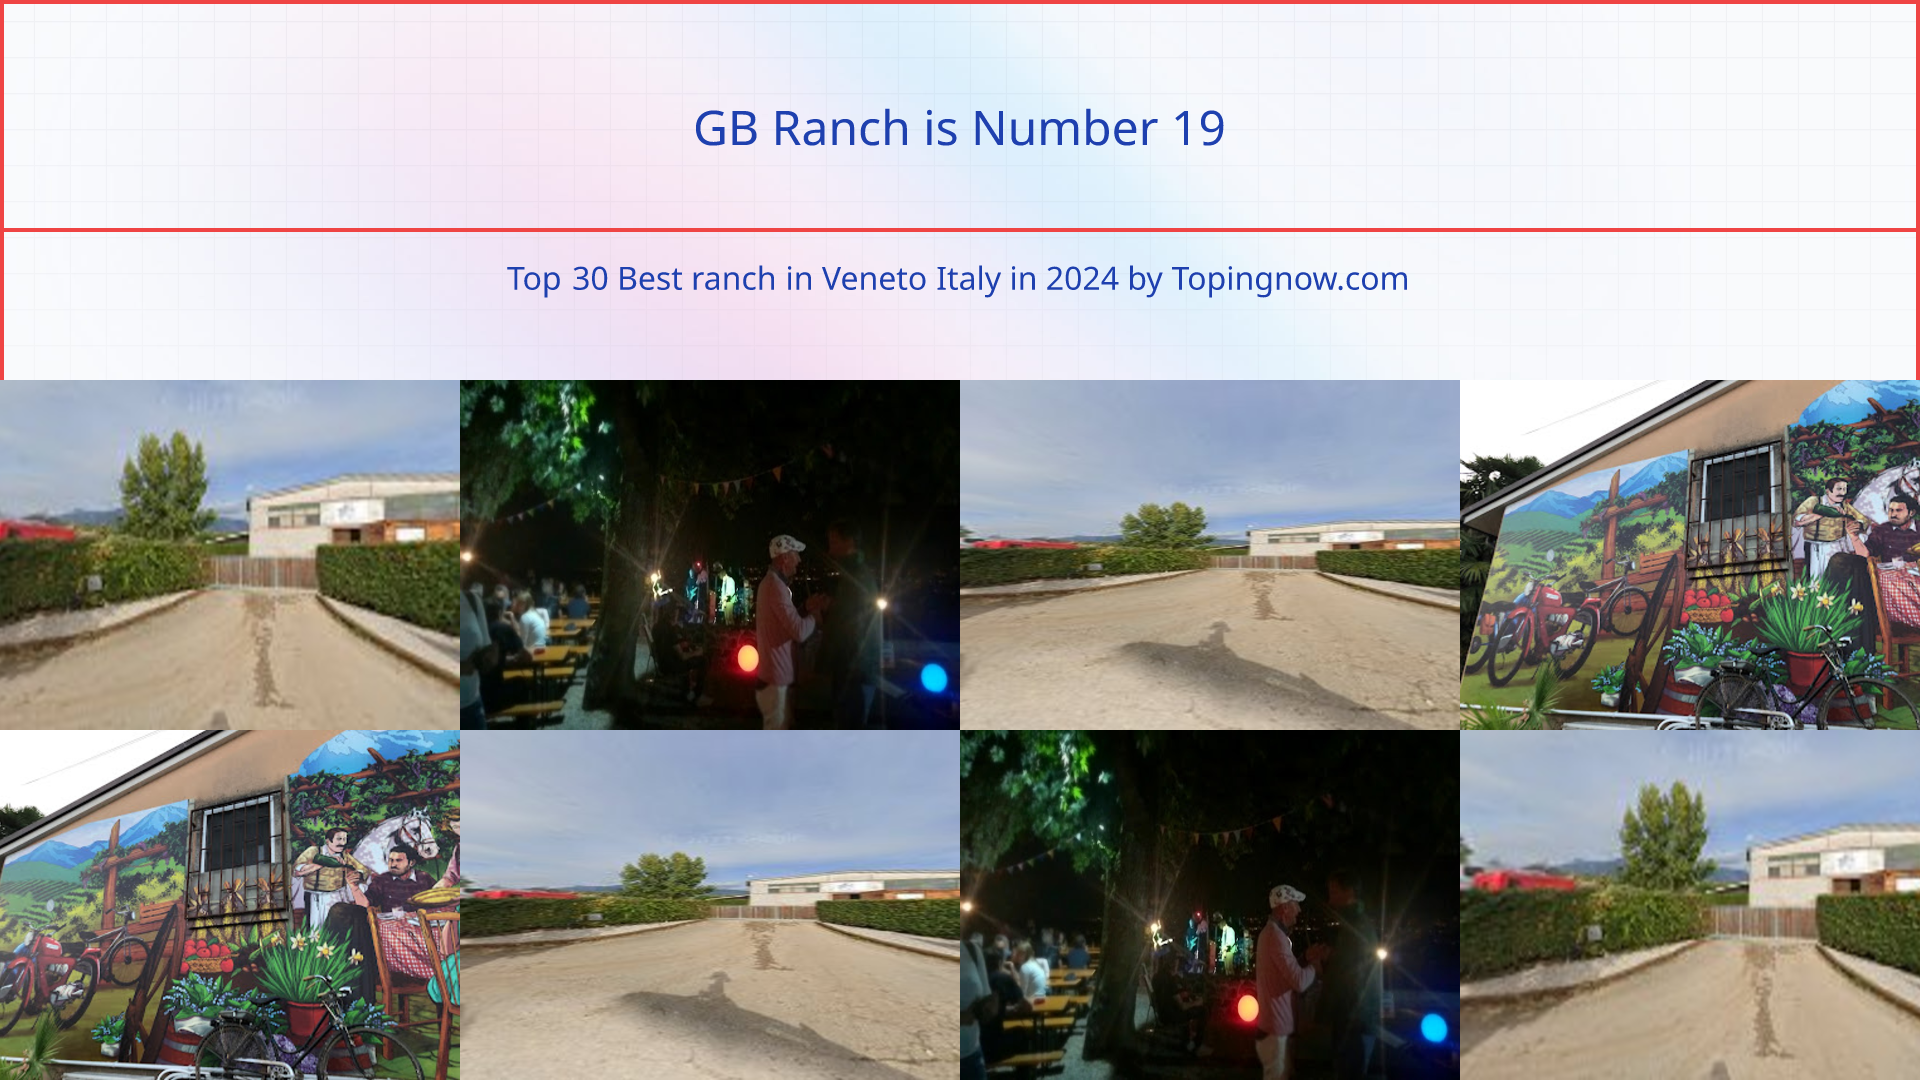 GB Ranch: Top 30 Best ranch in Veneto Italy in 2024